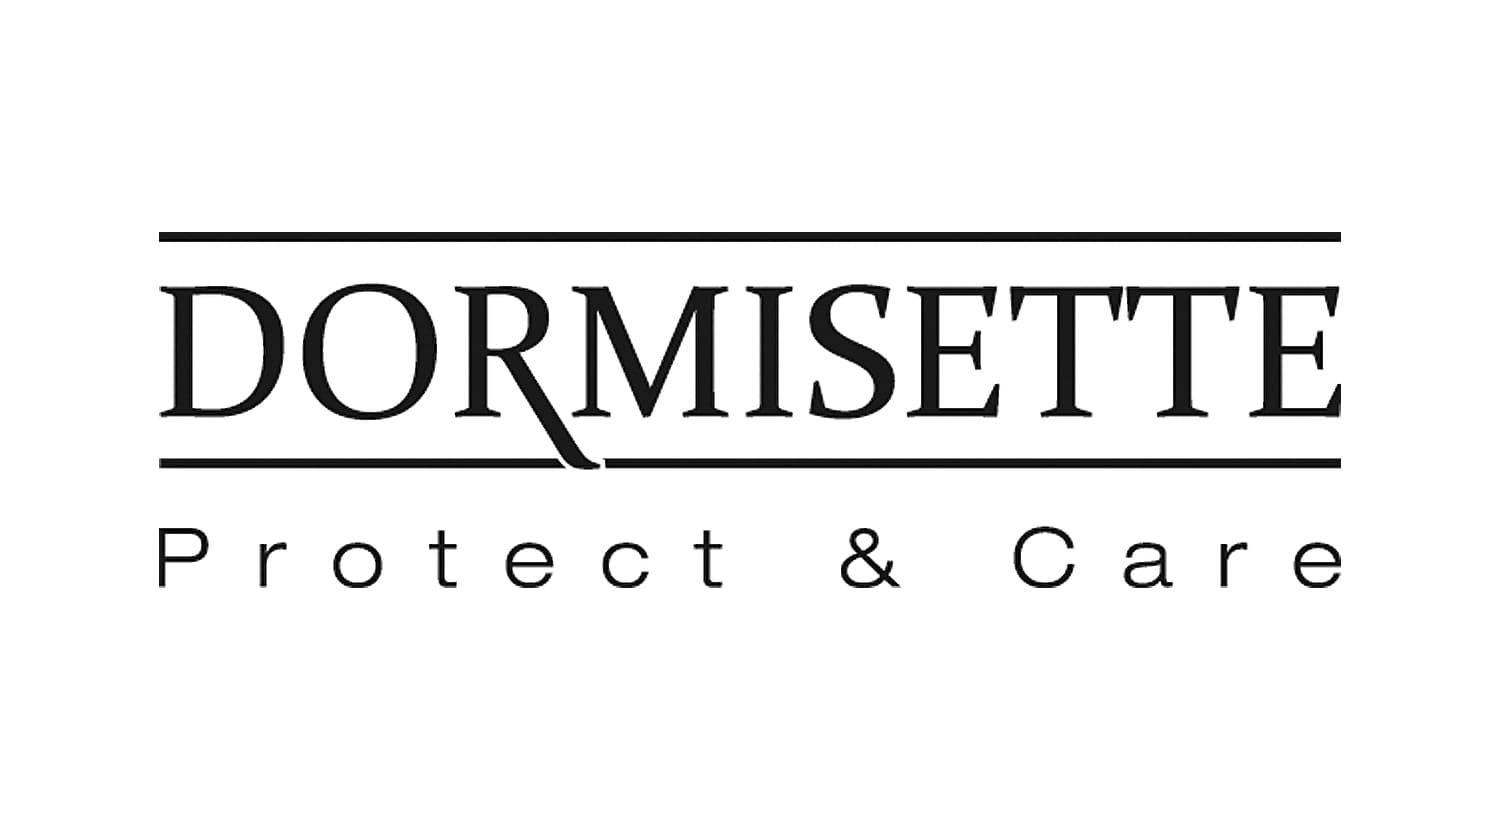 Dormisette Protect & Care